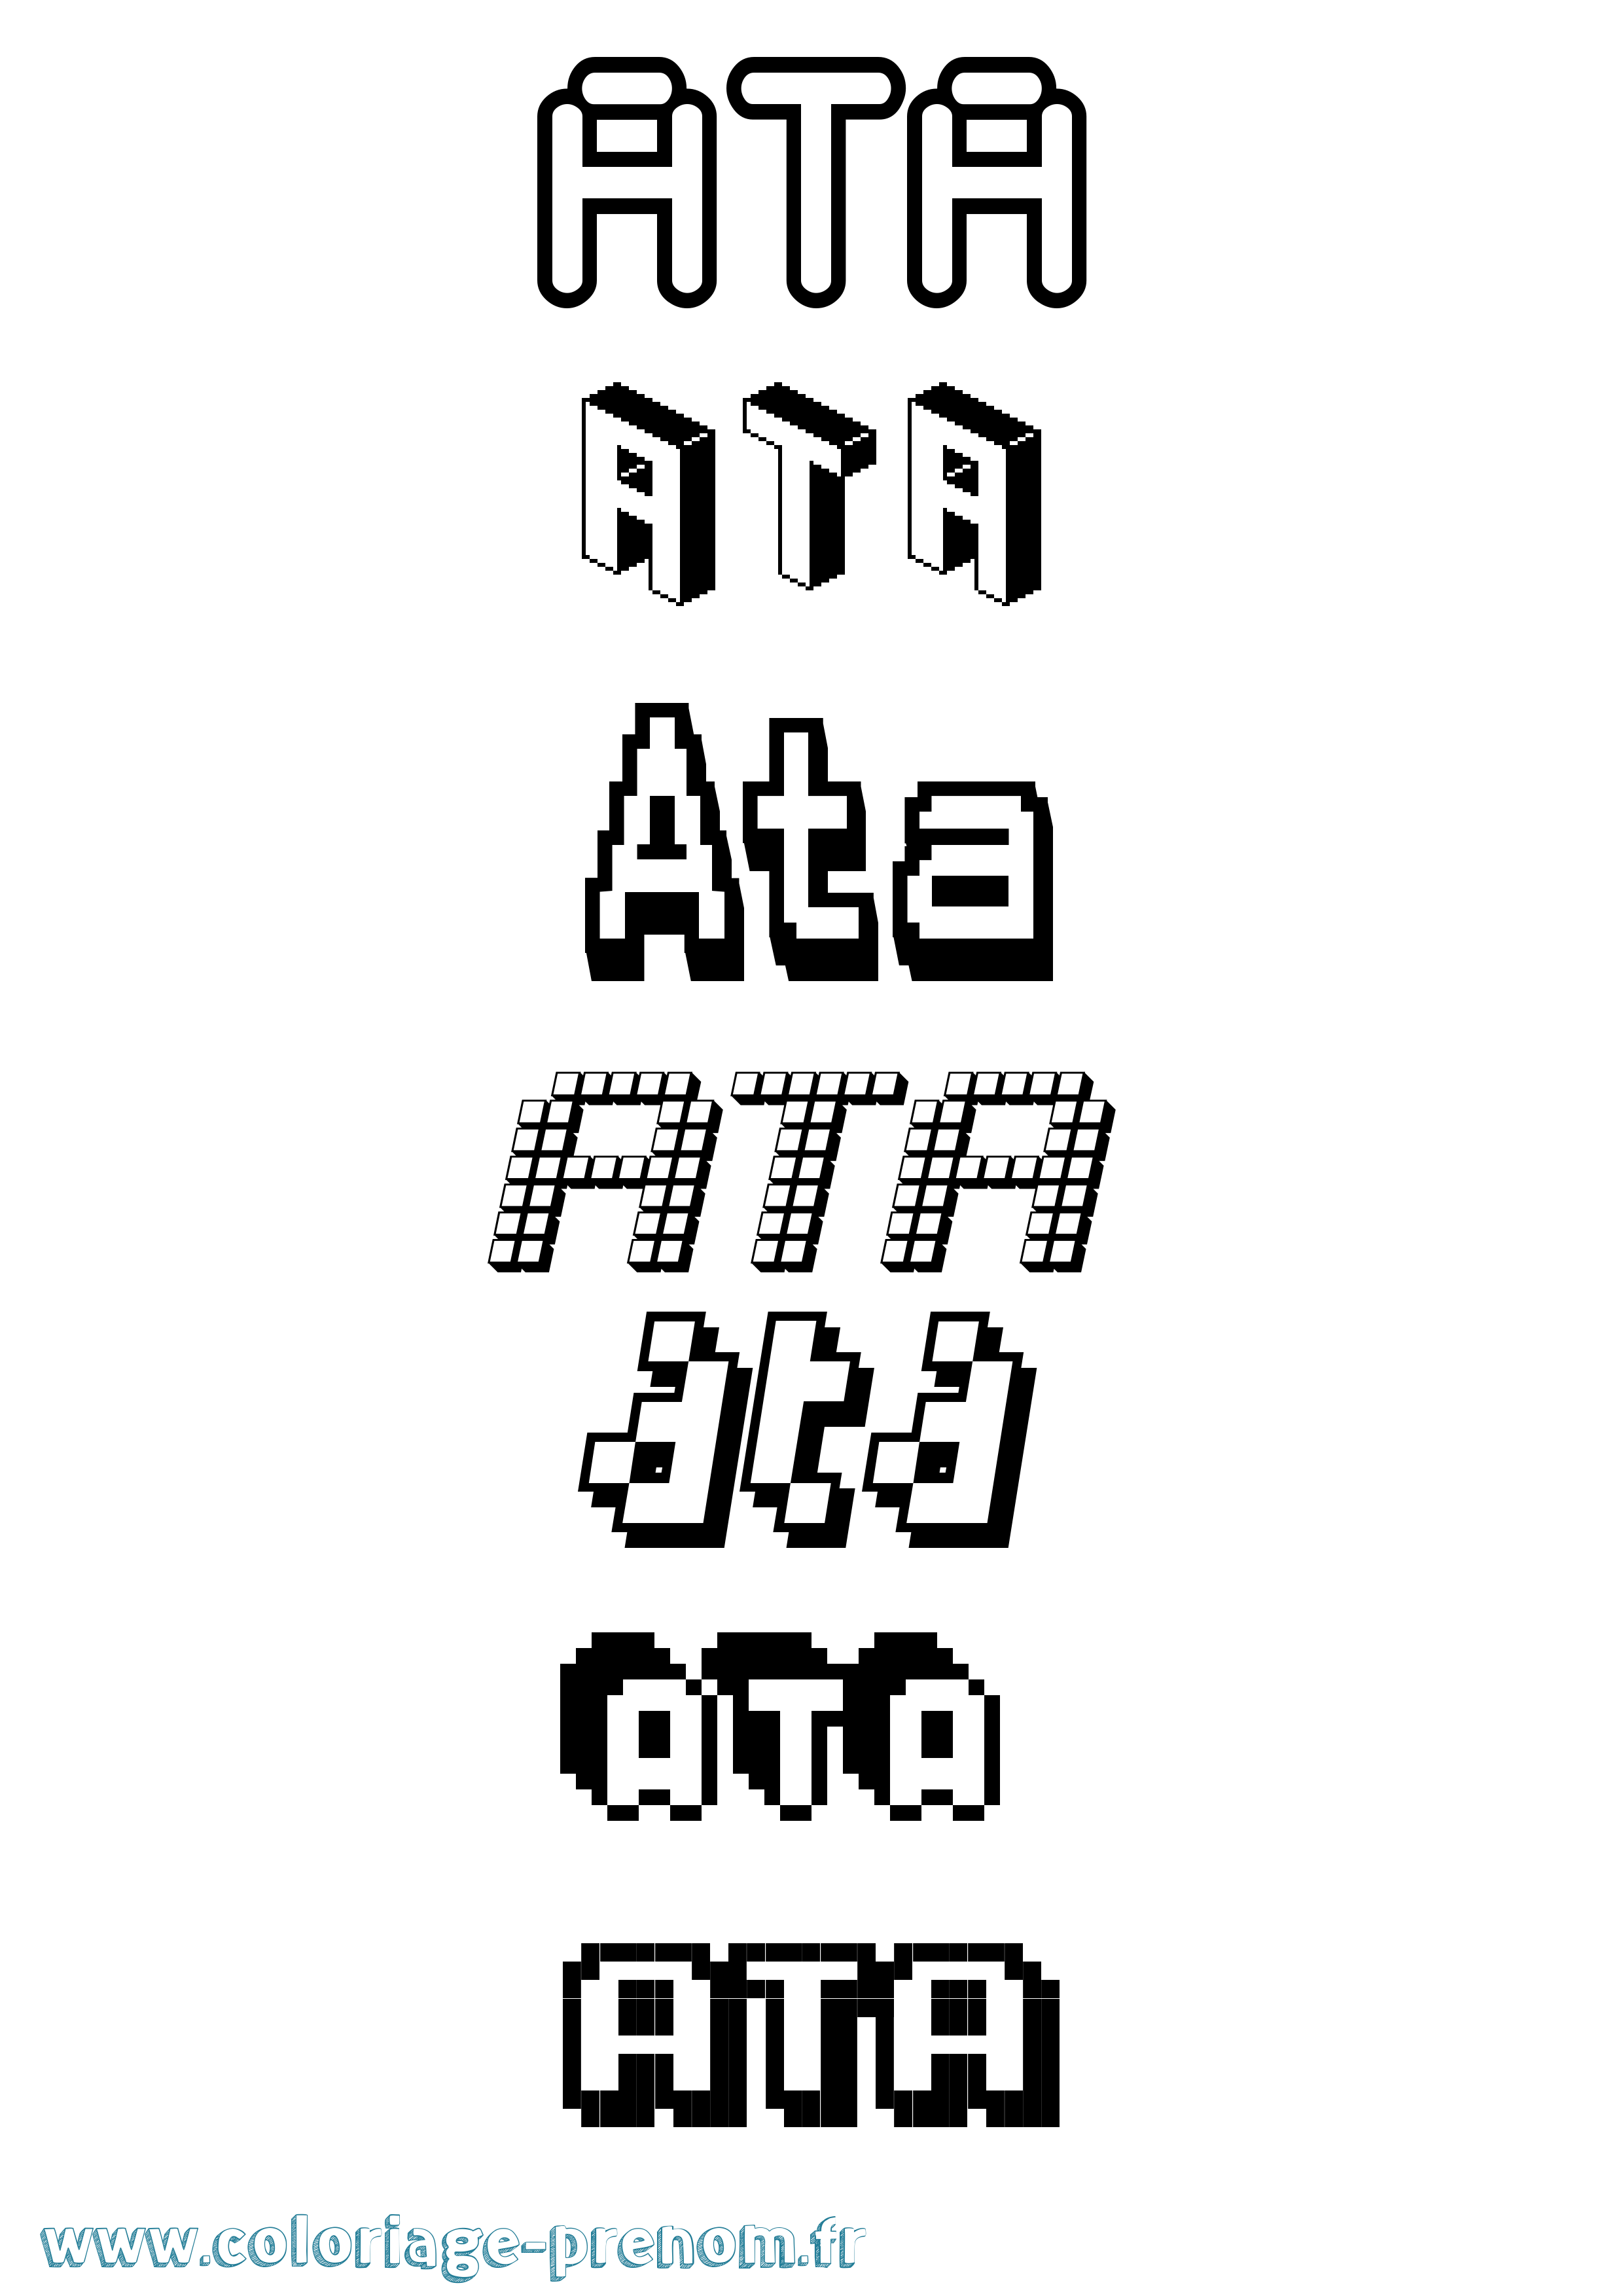 Coloriage prénom Ata Pixel